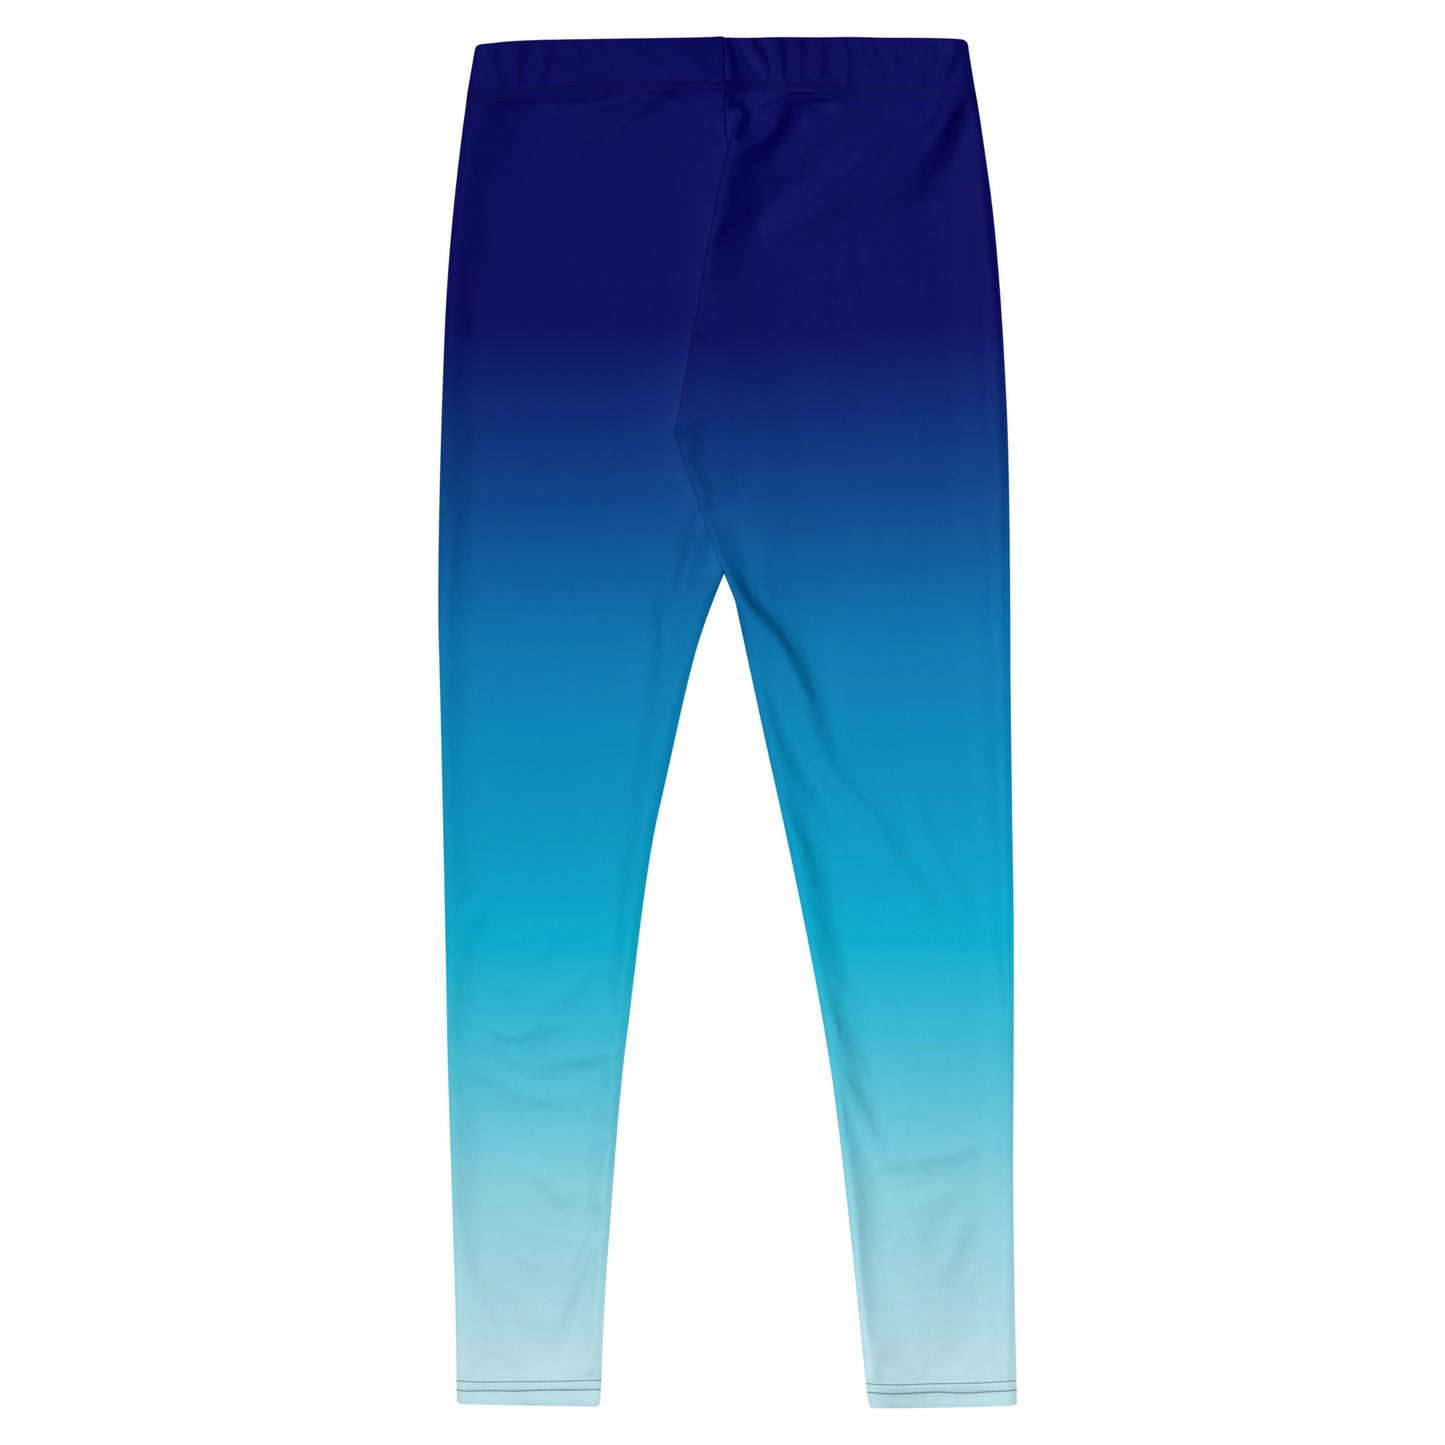 Blue Ombre Leggings Women Ladies, Royal to Ocean Blue Tie Dye Printed Yoga Pants Cute Graphic Workout Running Gym Fun Designer Tights